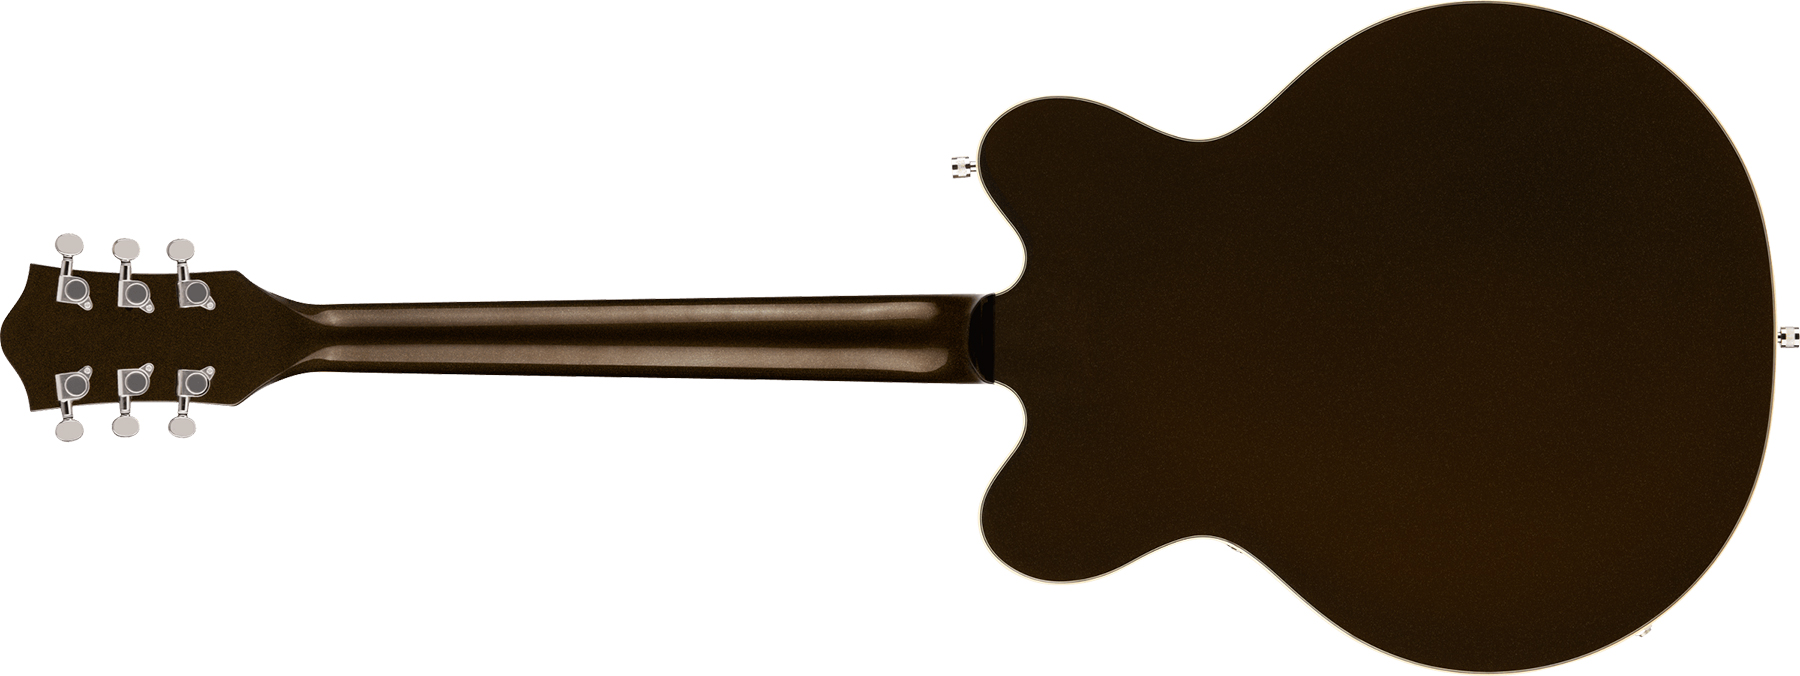 Gretsch G5622 Center Bloc Double Cut V-stoptail Electromatic Hh Ht Lau - Black Gold - Semi-hollow electric guitar - Variation 1